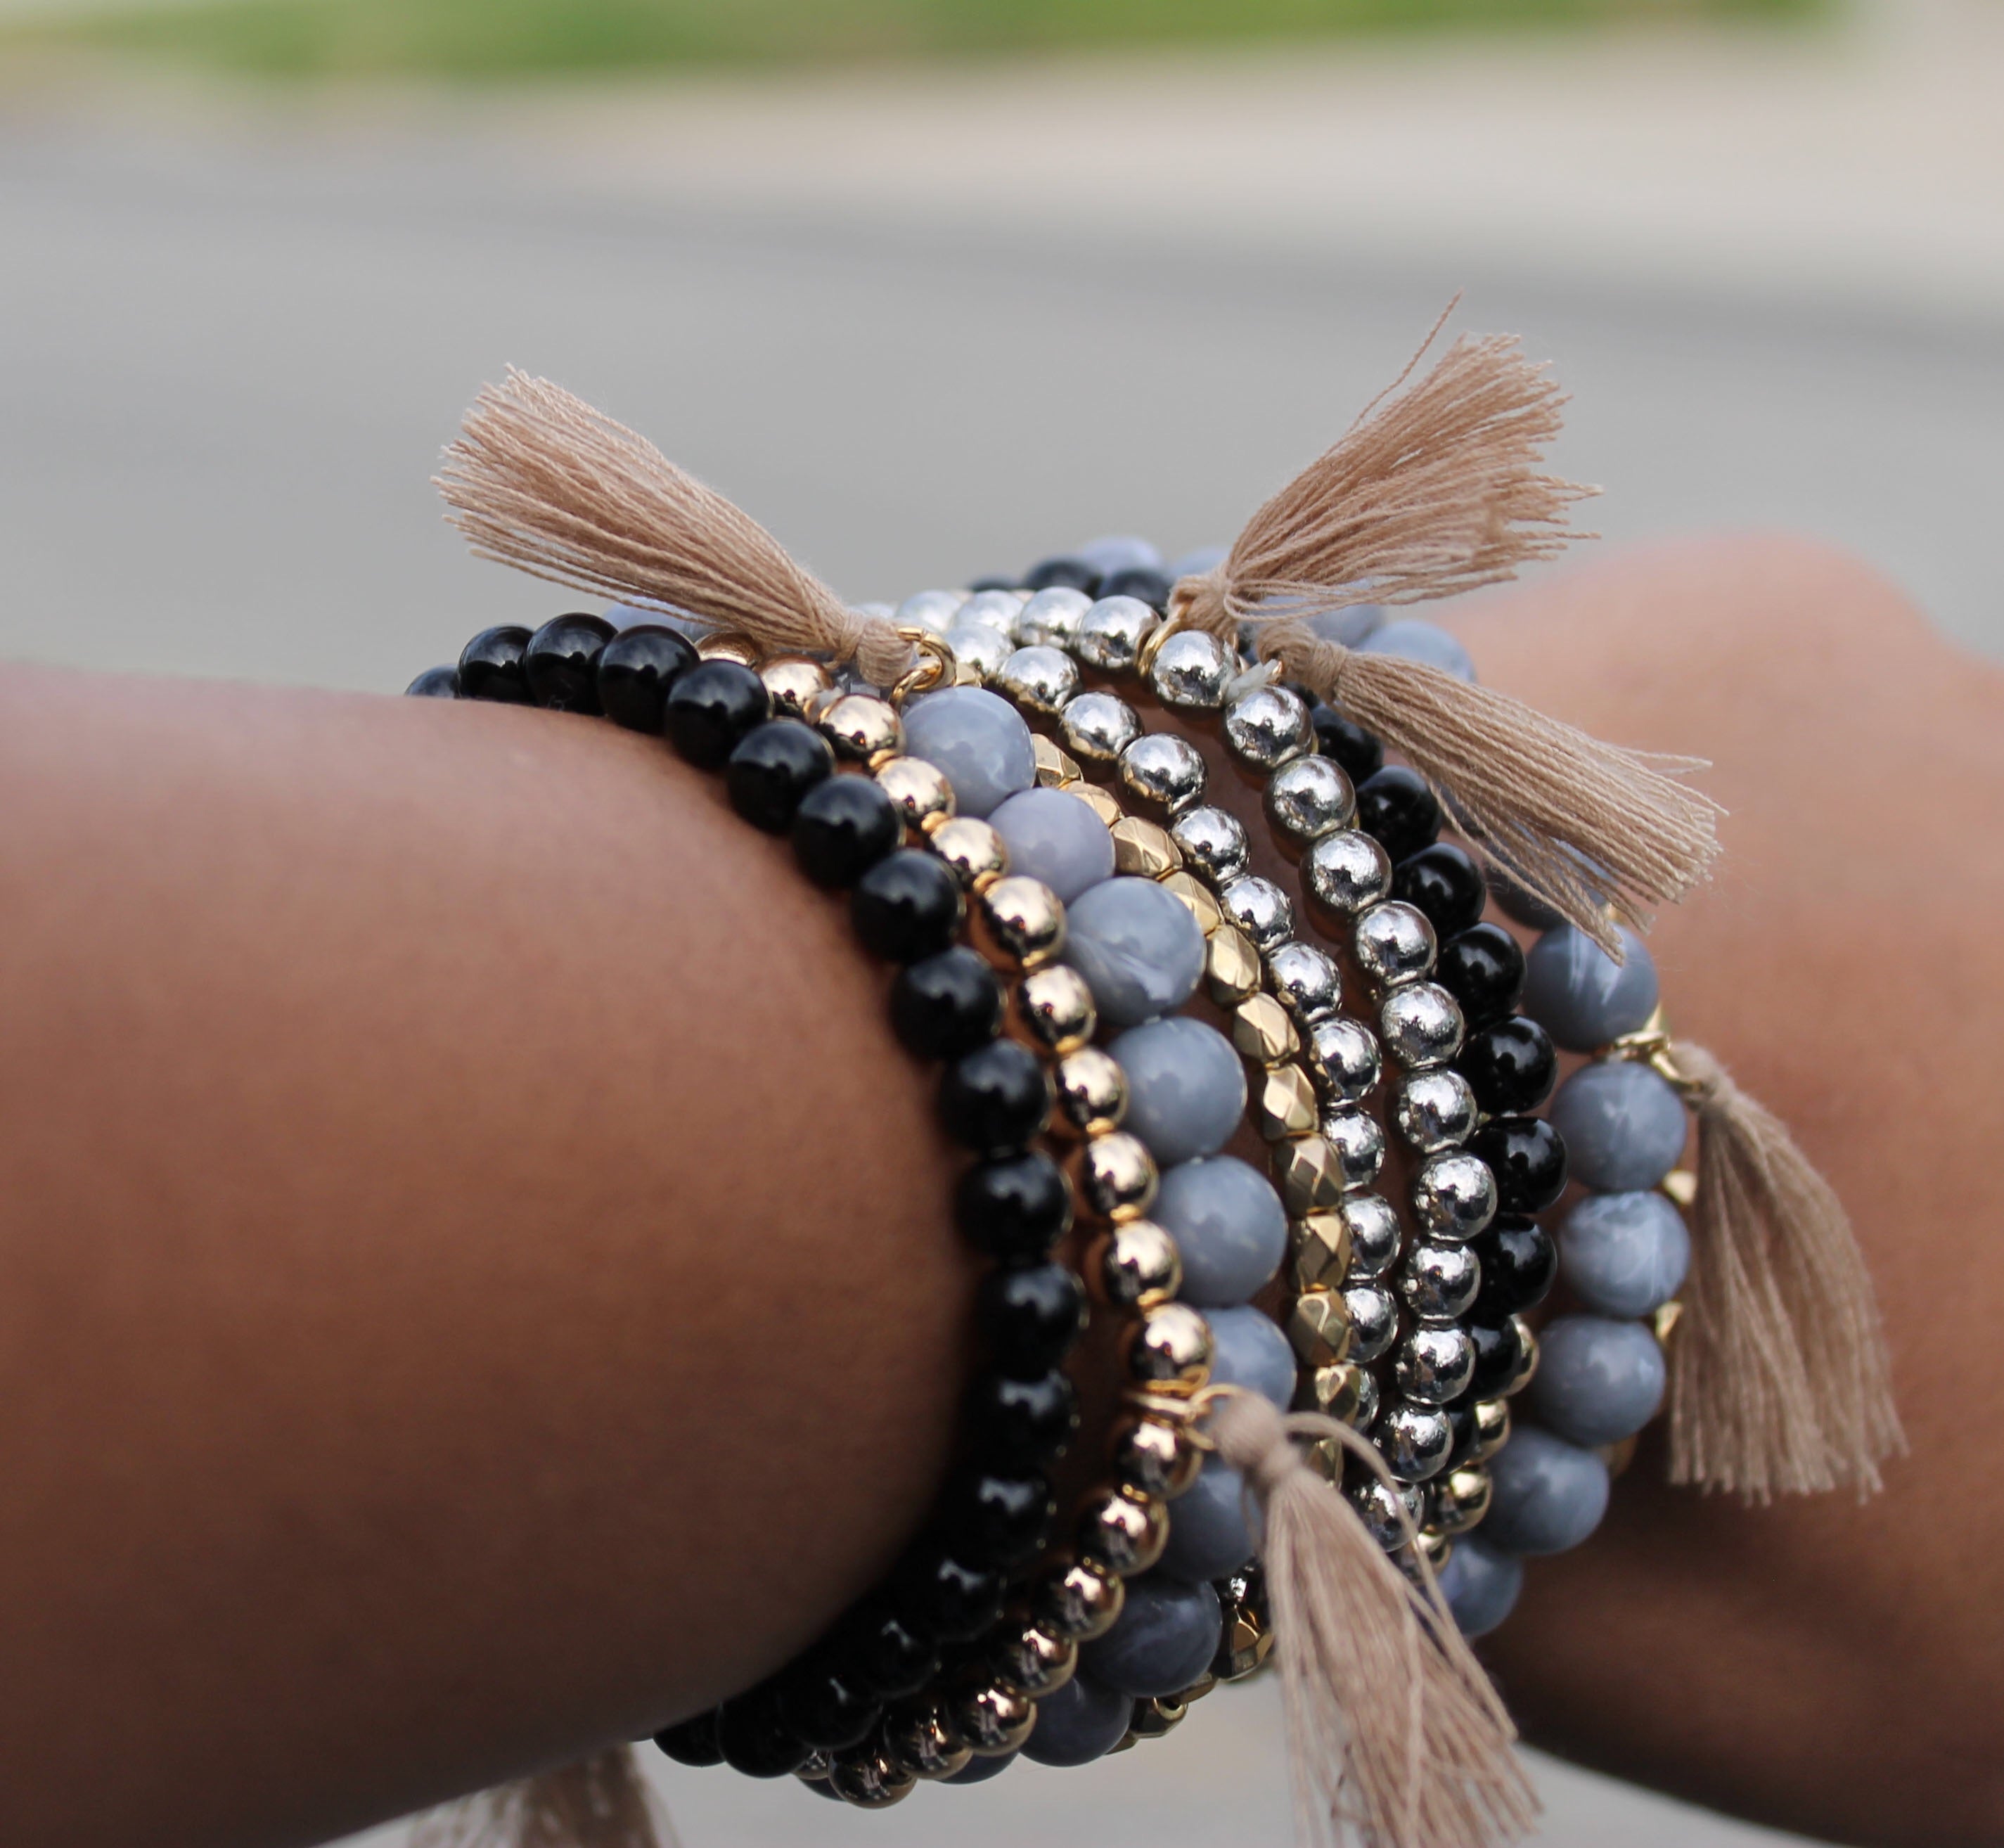 'Zara' Beads and Tassels Bracelet